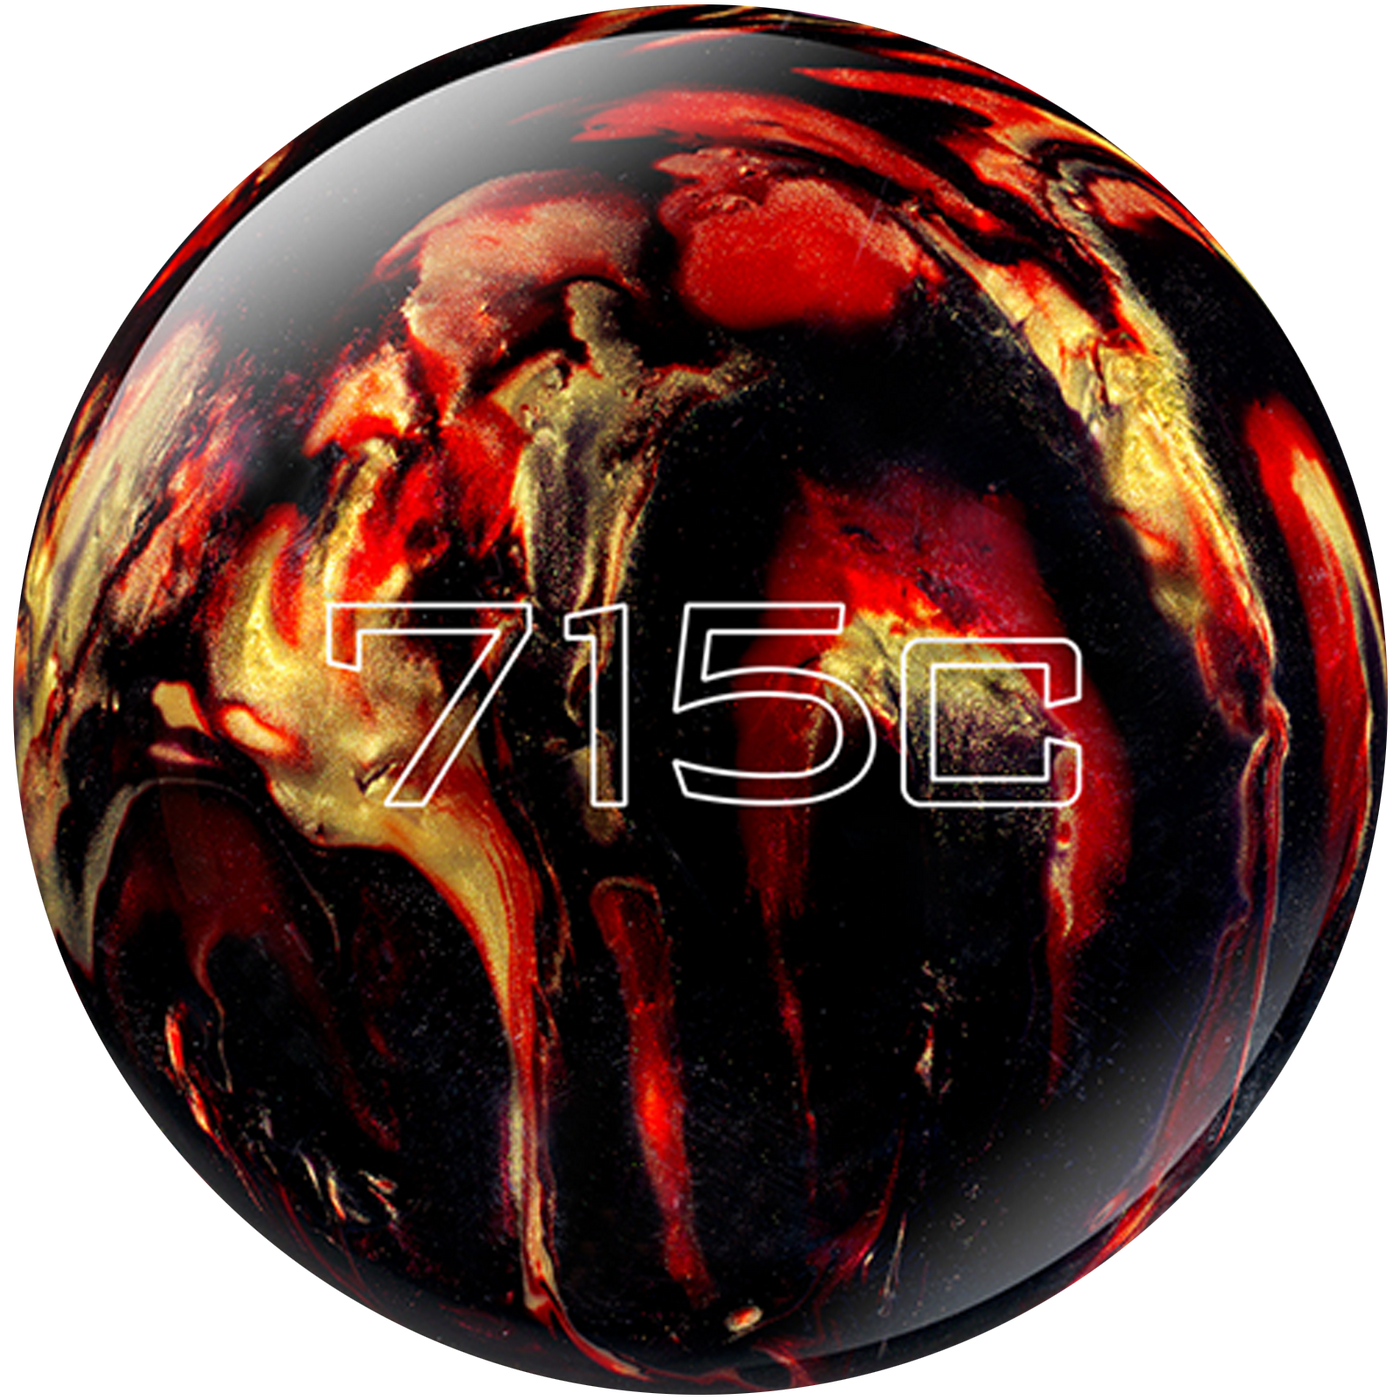 715C Bowling Ball